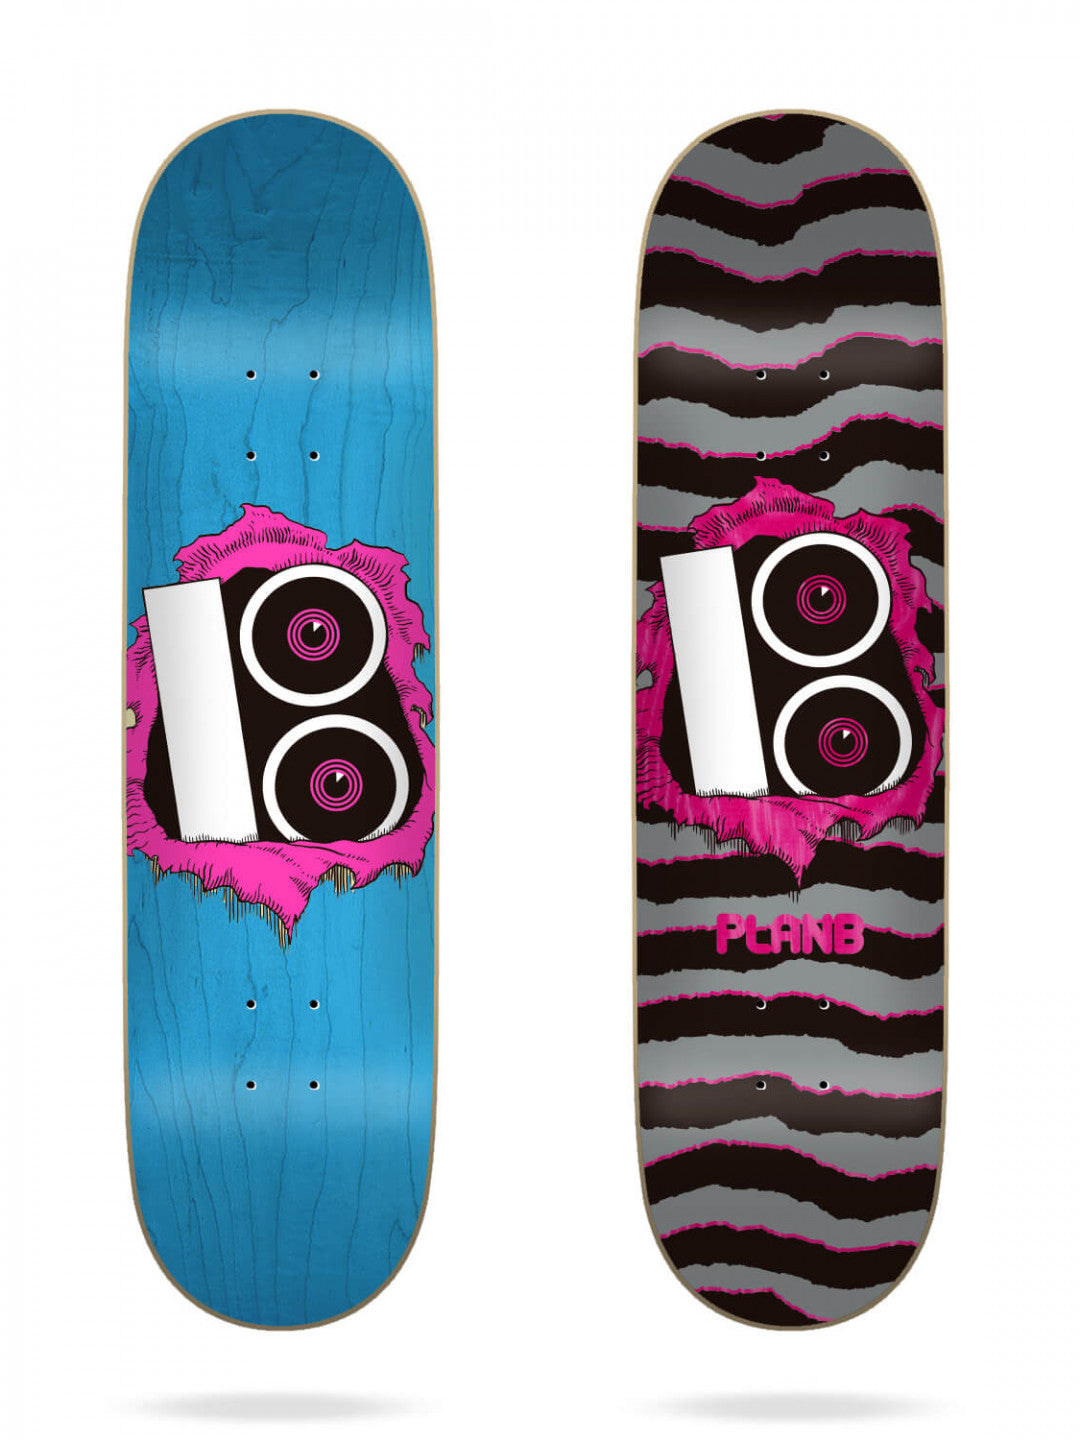 18” Mini Skate Board with custom graphics